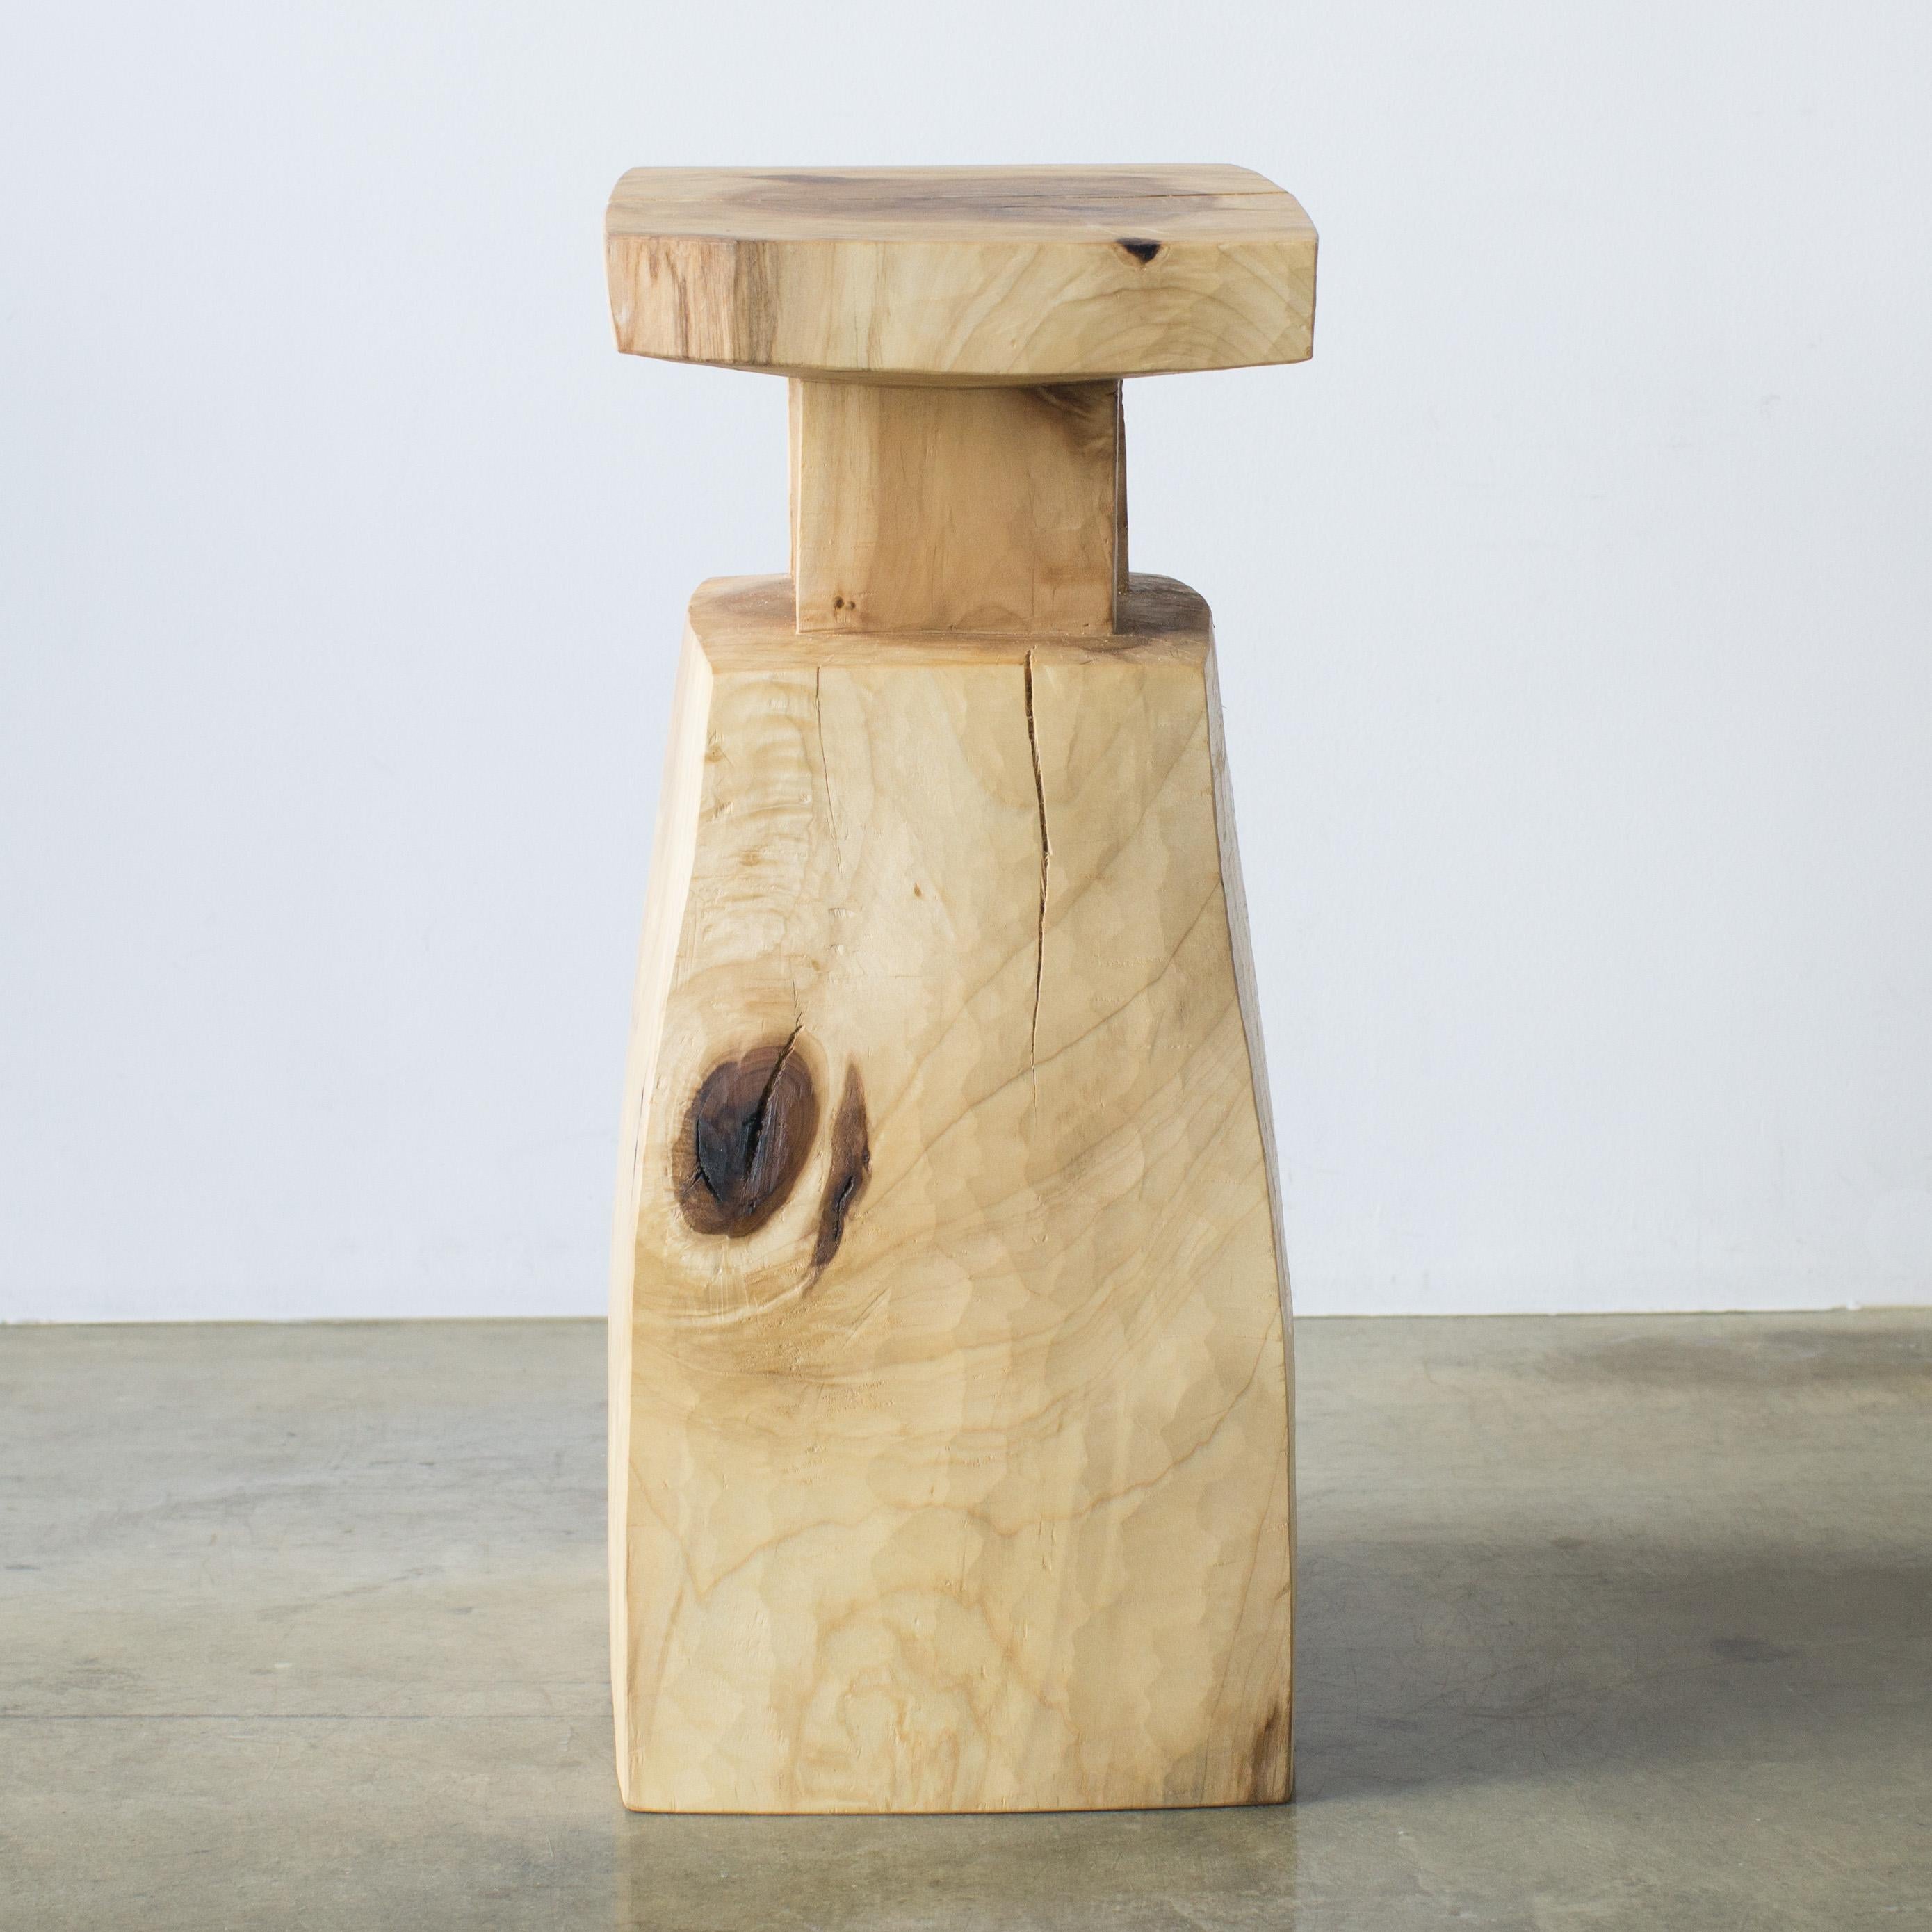 Japanese Hiroyuki Nishimura and Zogei Furniture Sculptural wood Stool12 Tribal Glamping For Sale